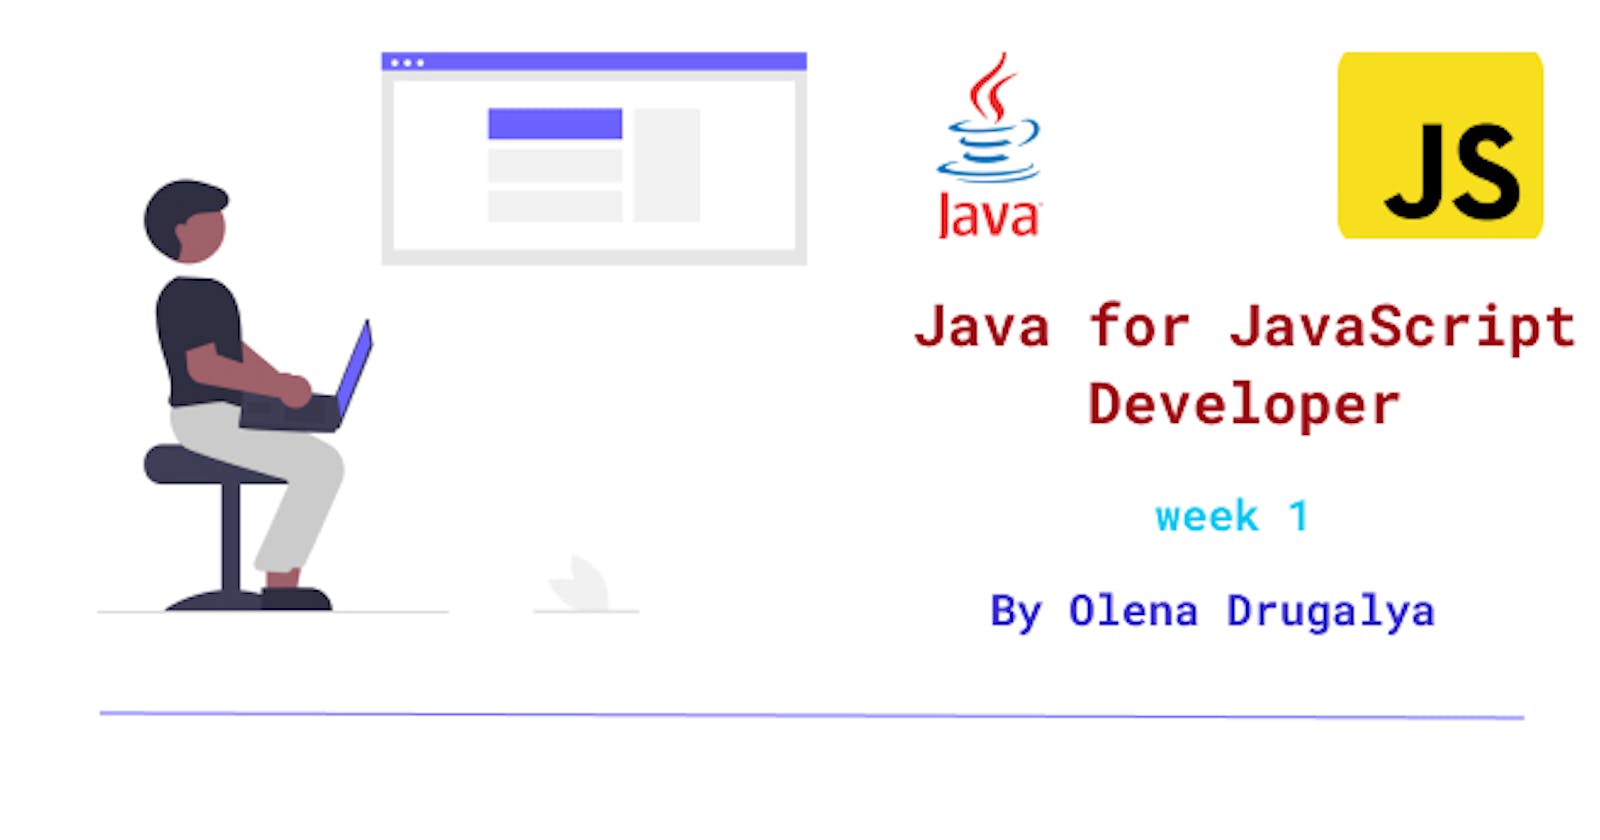 Learning Java as JavaScript Developer - week 1